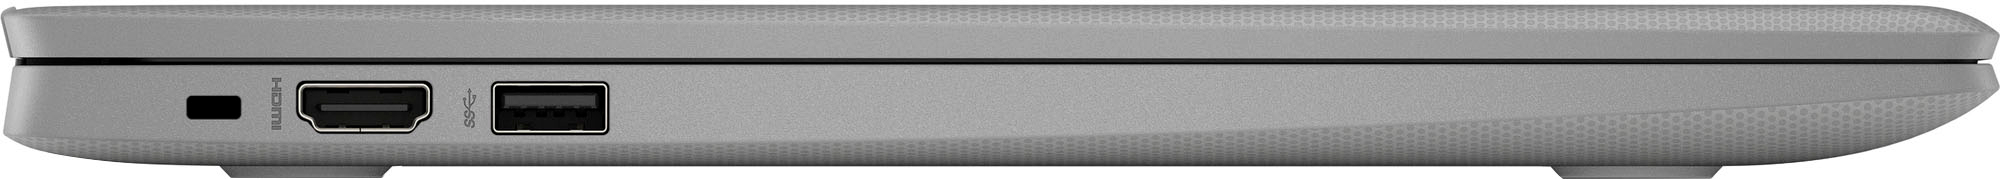 14a-ne0013dx 64GB Celeron HP Chromebook Intel Modern - Gray 14\